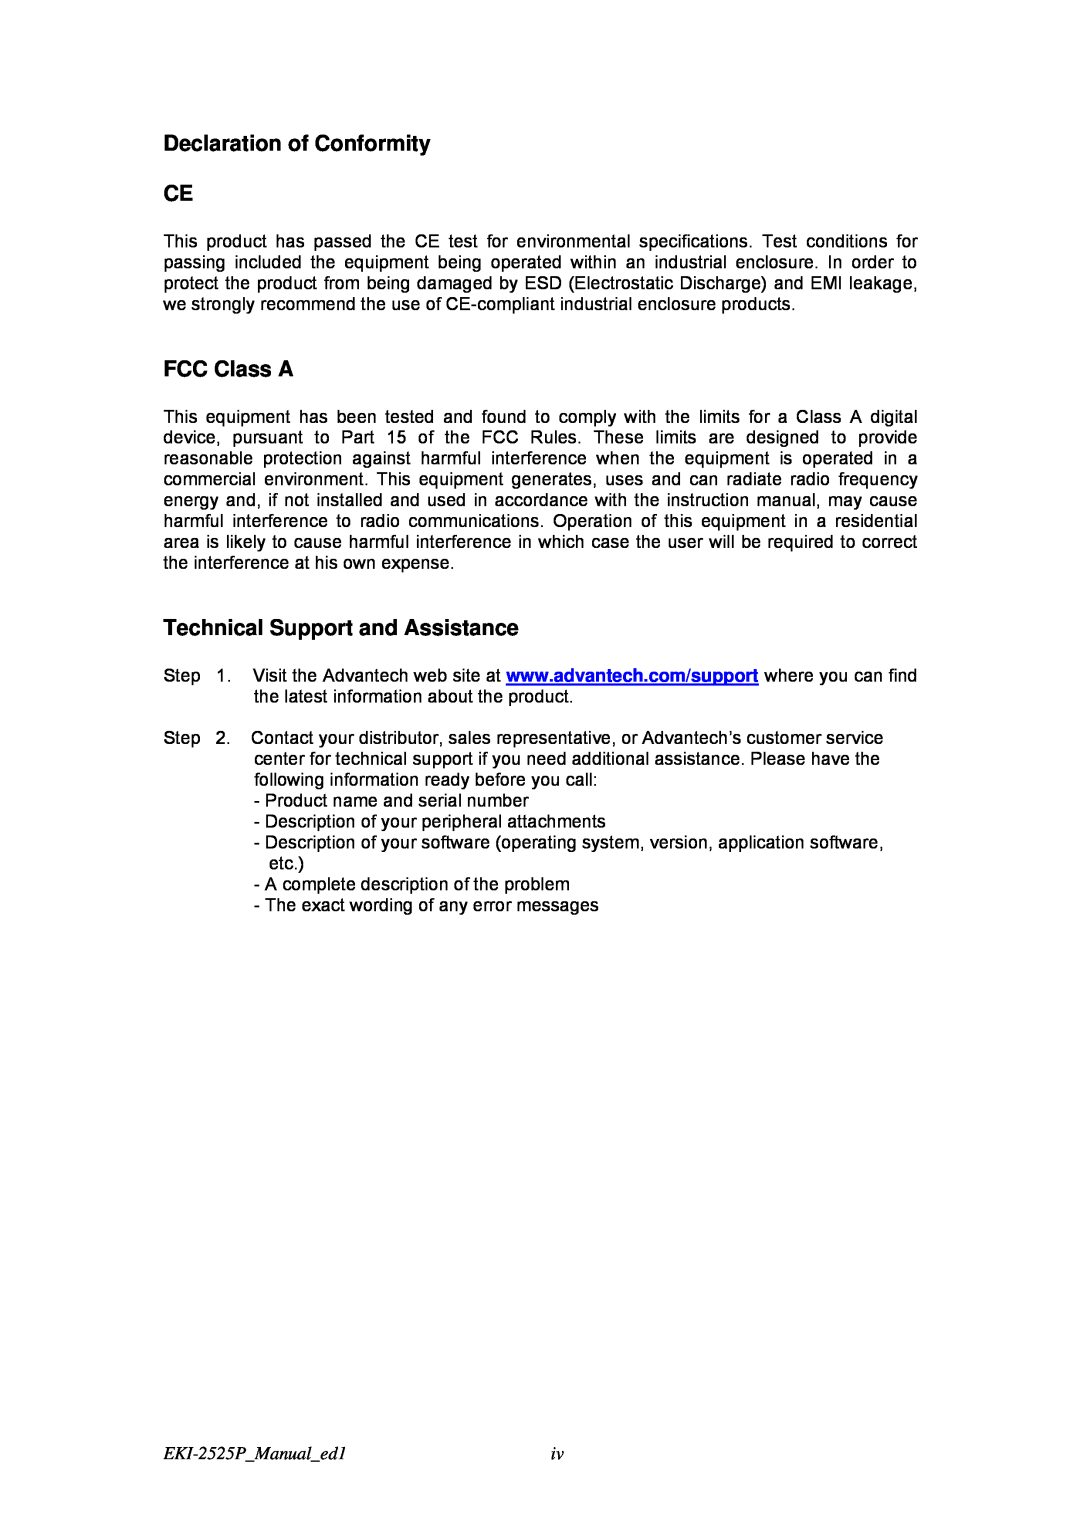 Advantech user manual Declaration of Conformity CE, FCC Class A, Technical Support and Assistance, EKI-2525PManualed1 